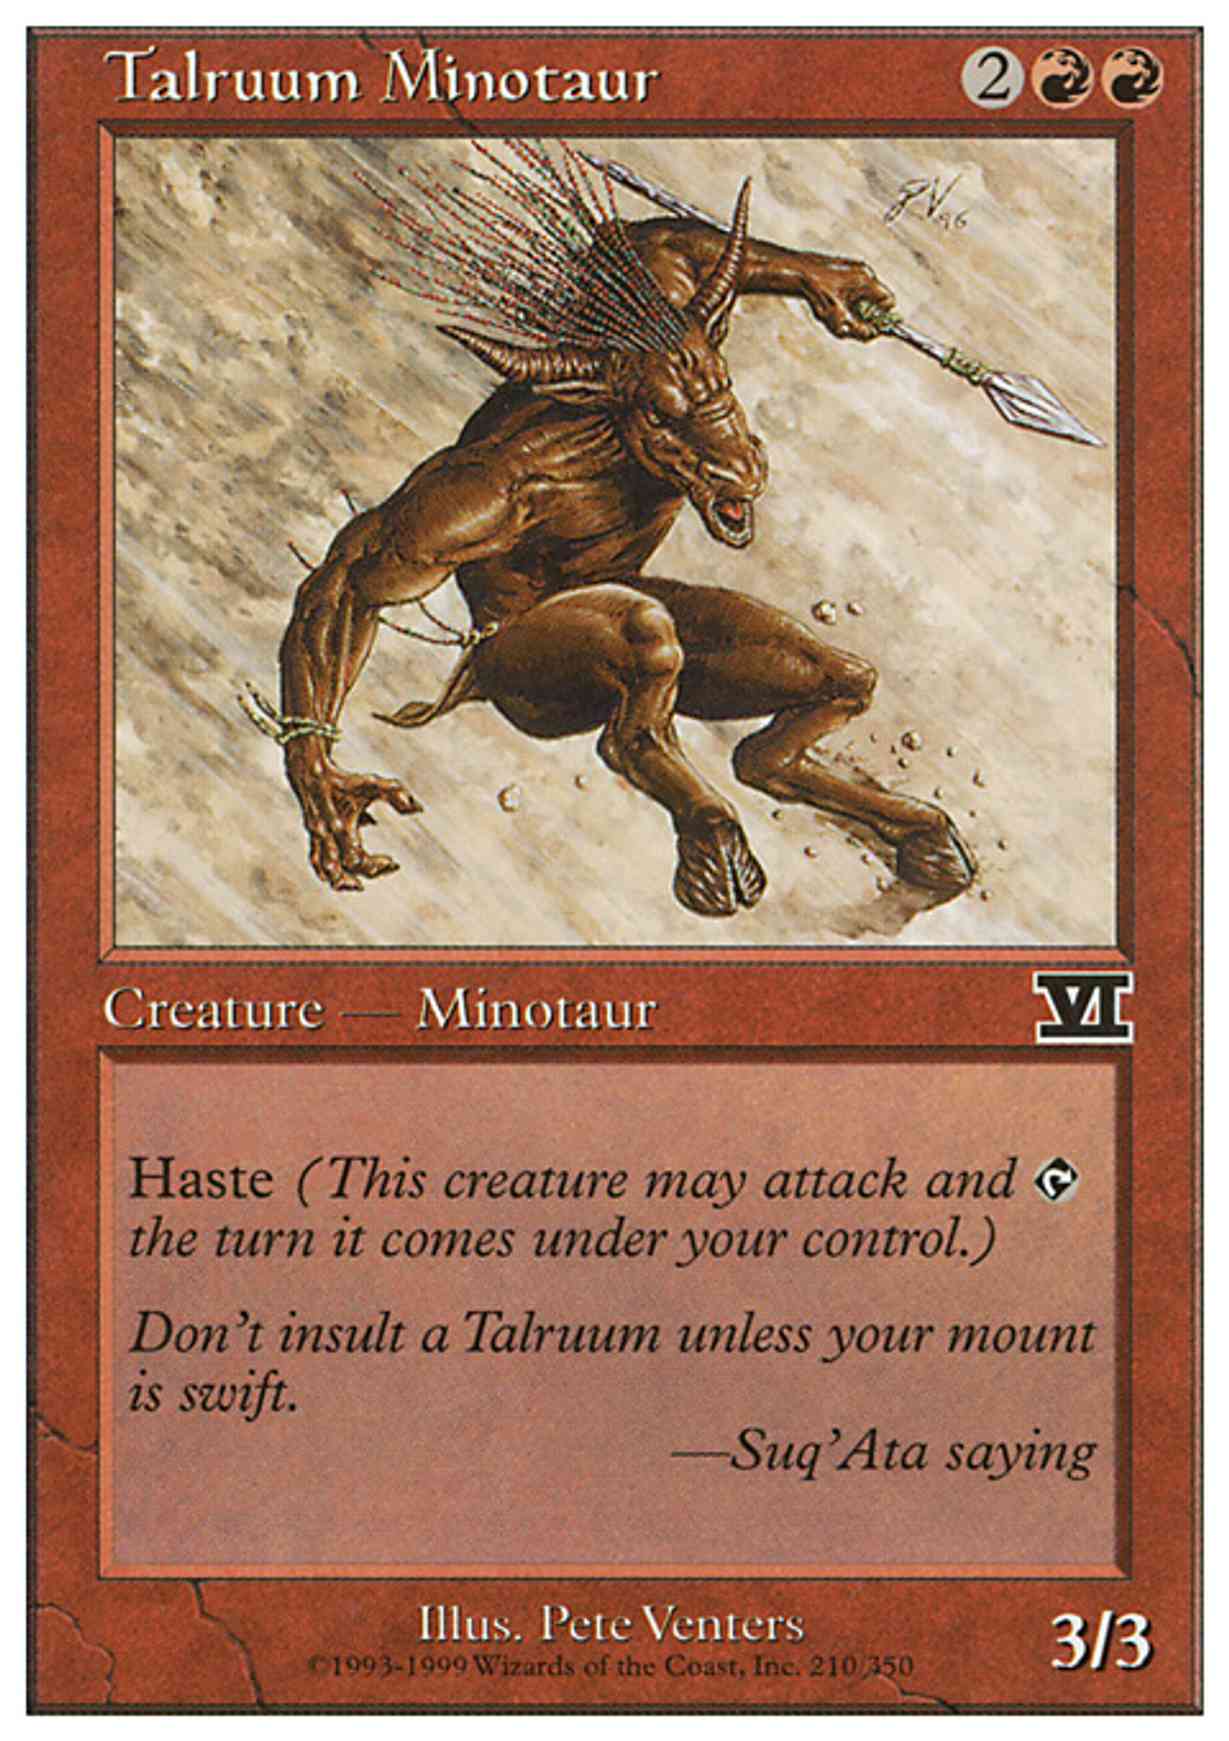 Talruum Minotaur magic card front